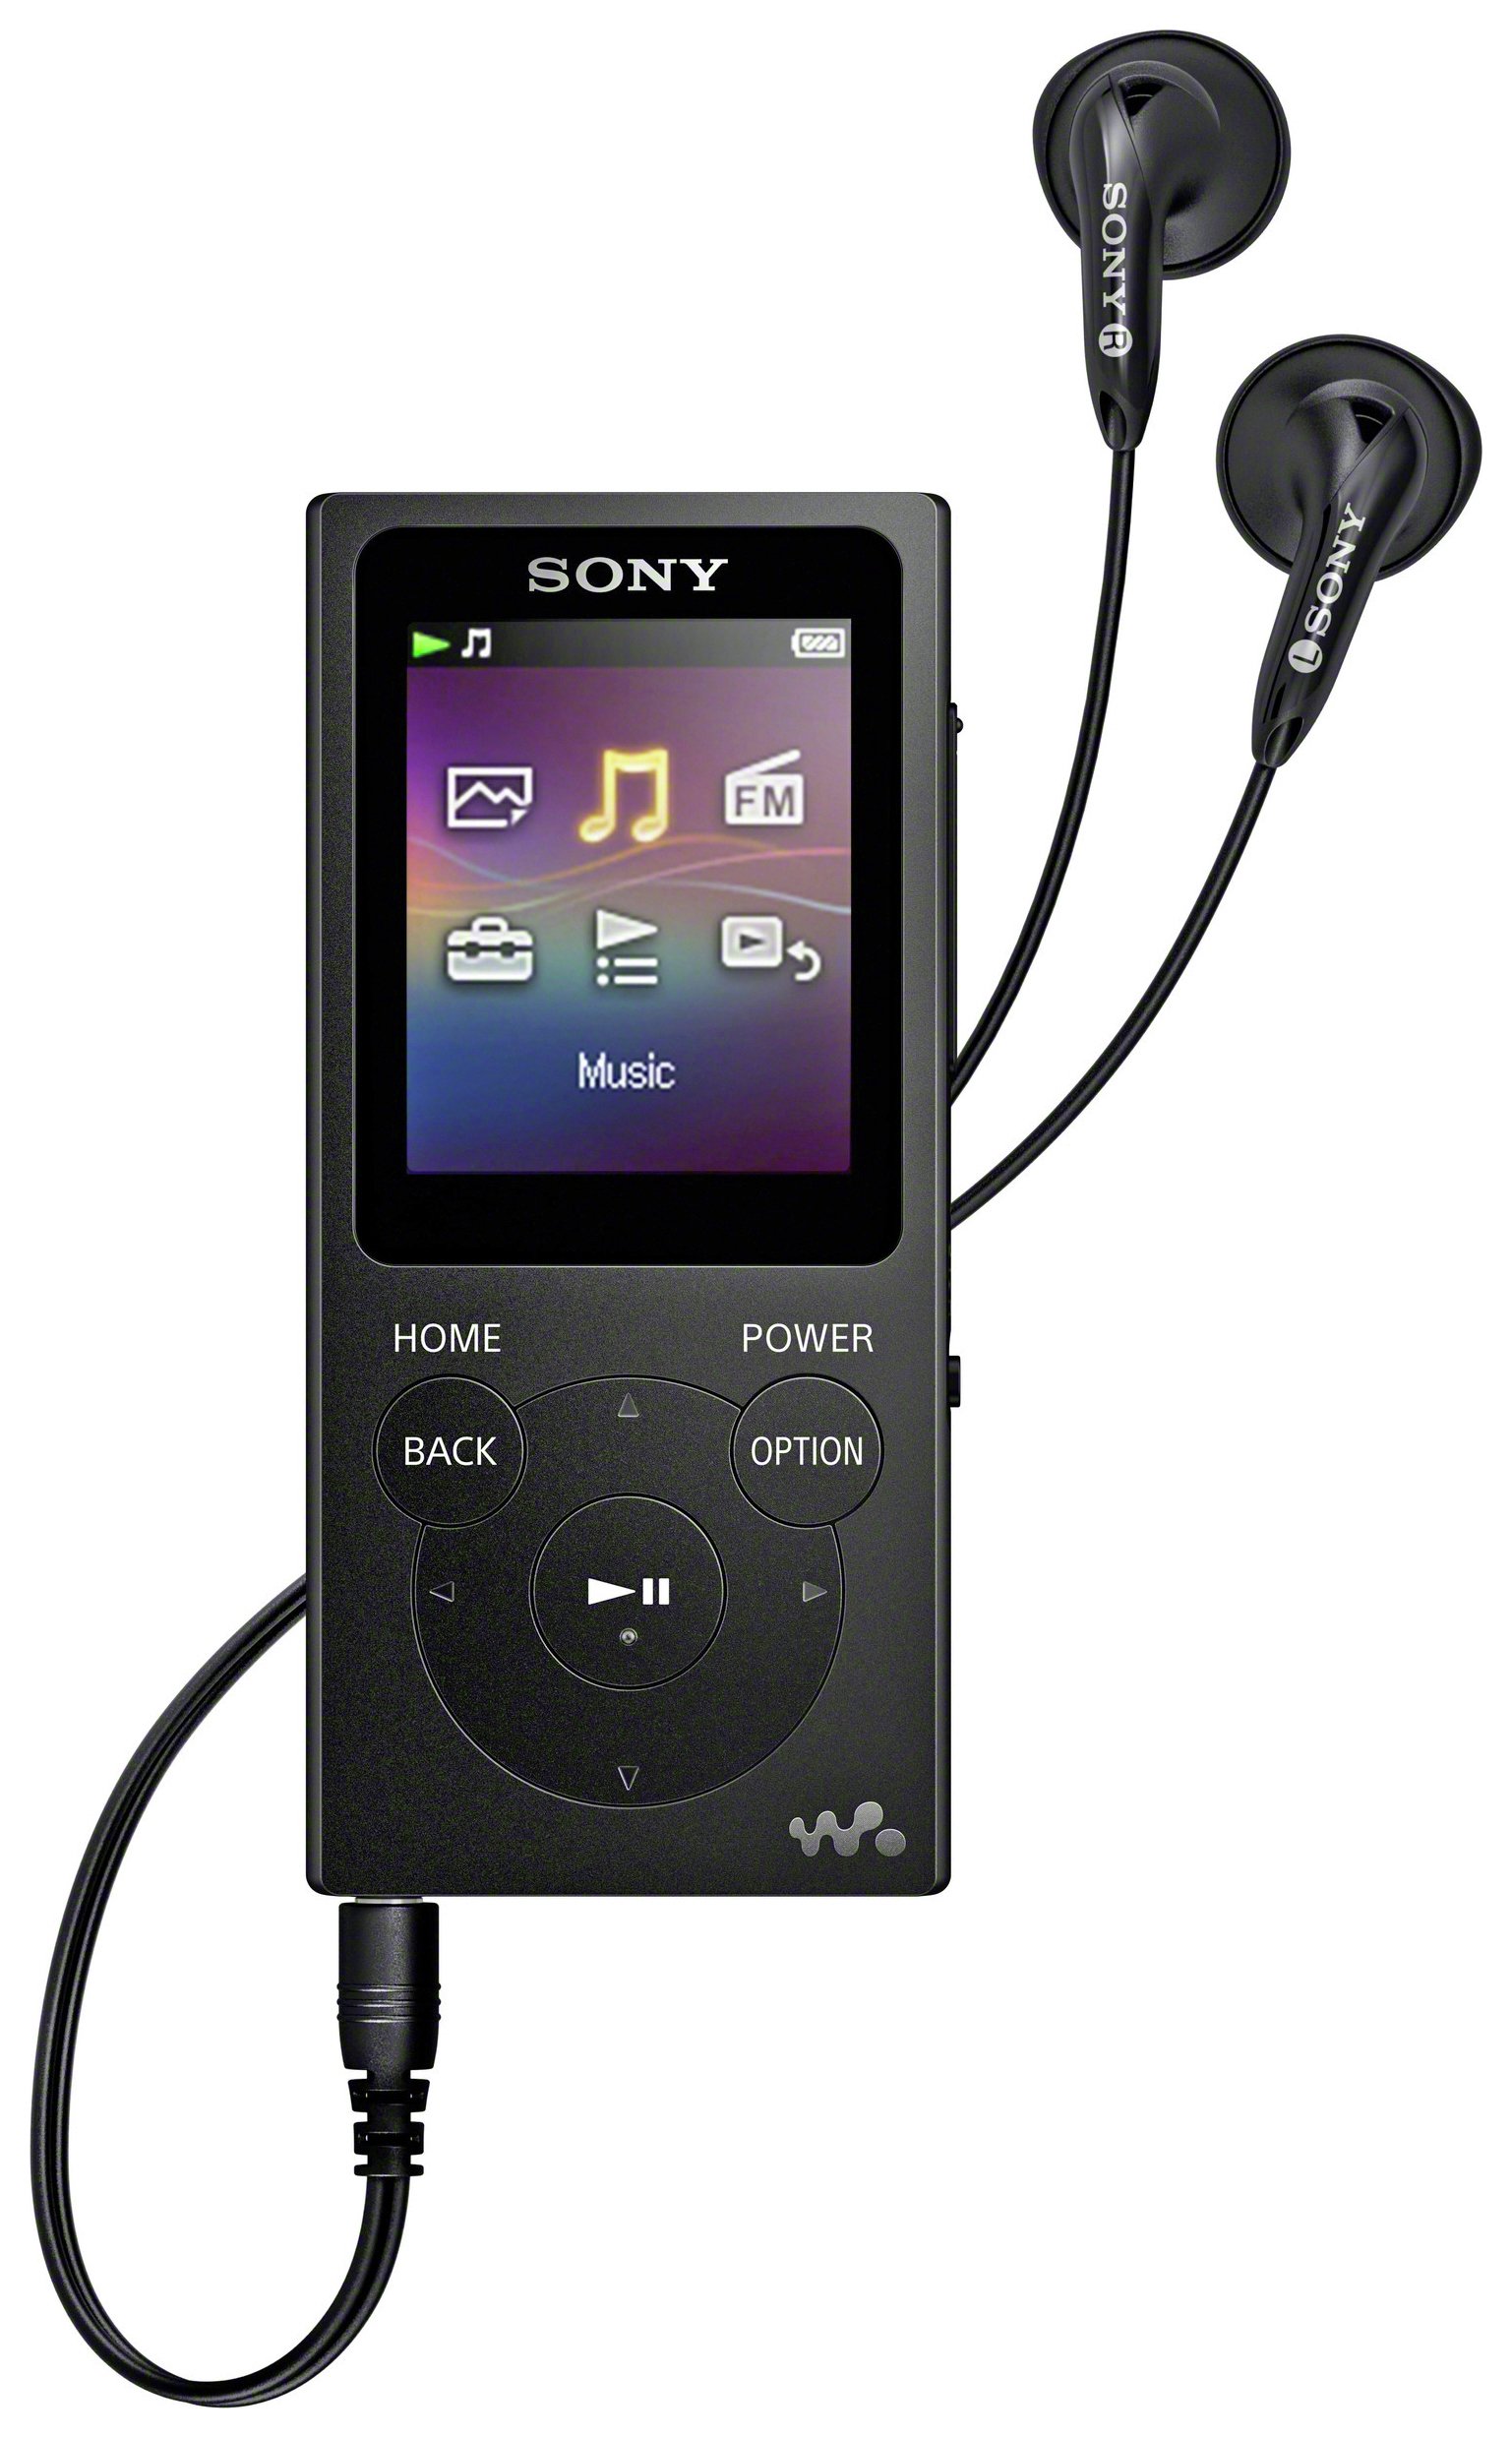 Sony NW-E394 Walkman 8GB MP3 Player - Black